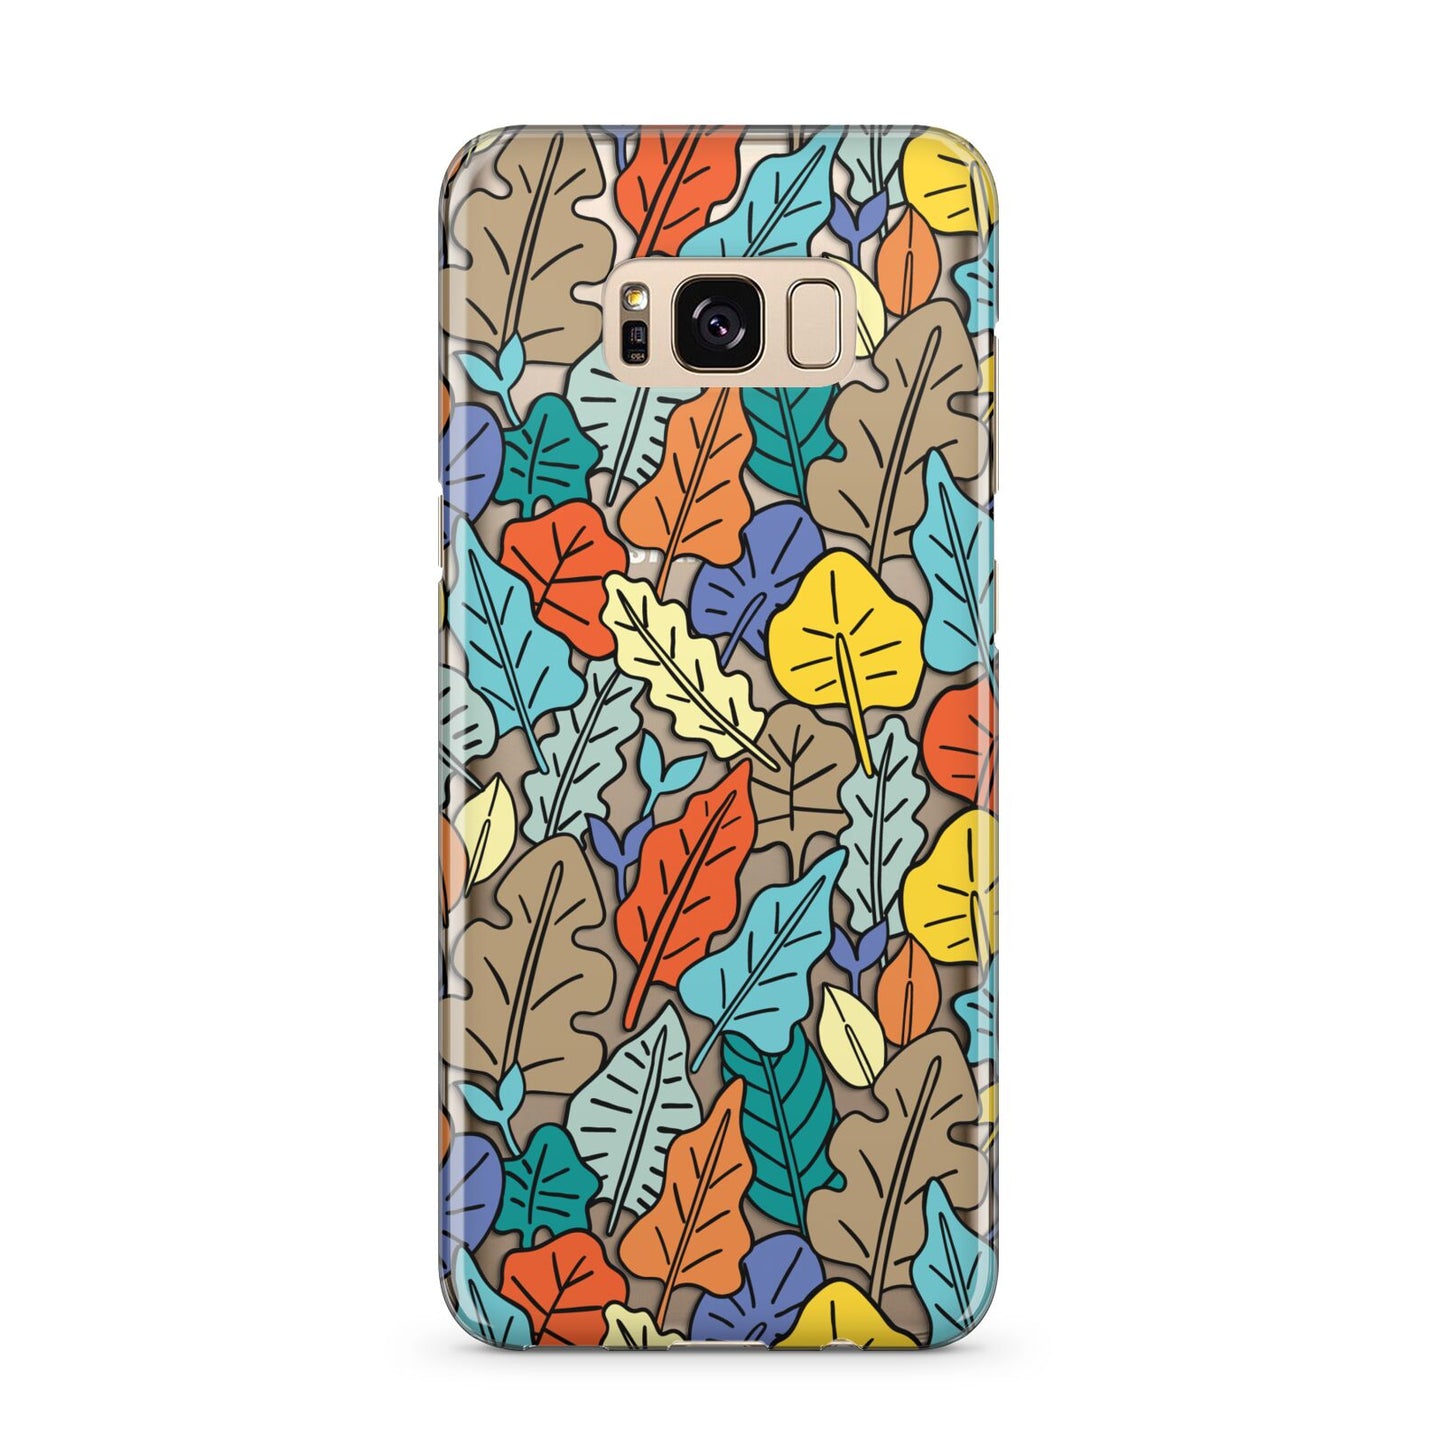 Autumn Leaves Samsung Galaxy S8 Plus Case